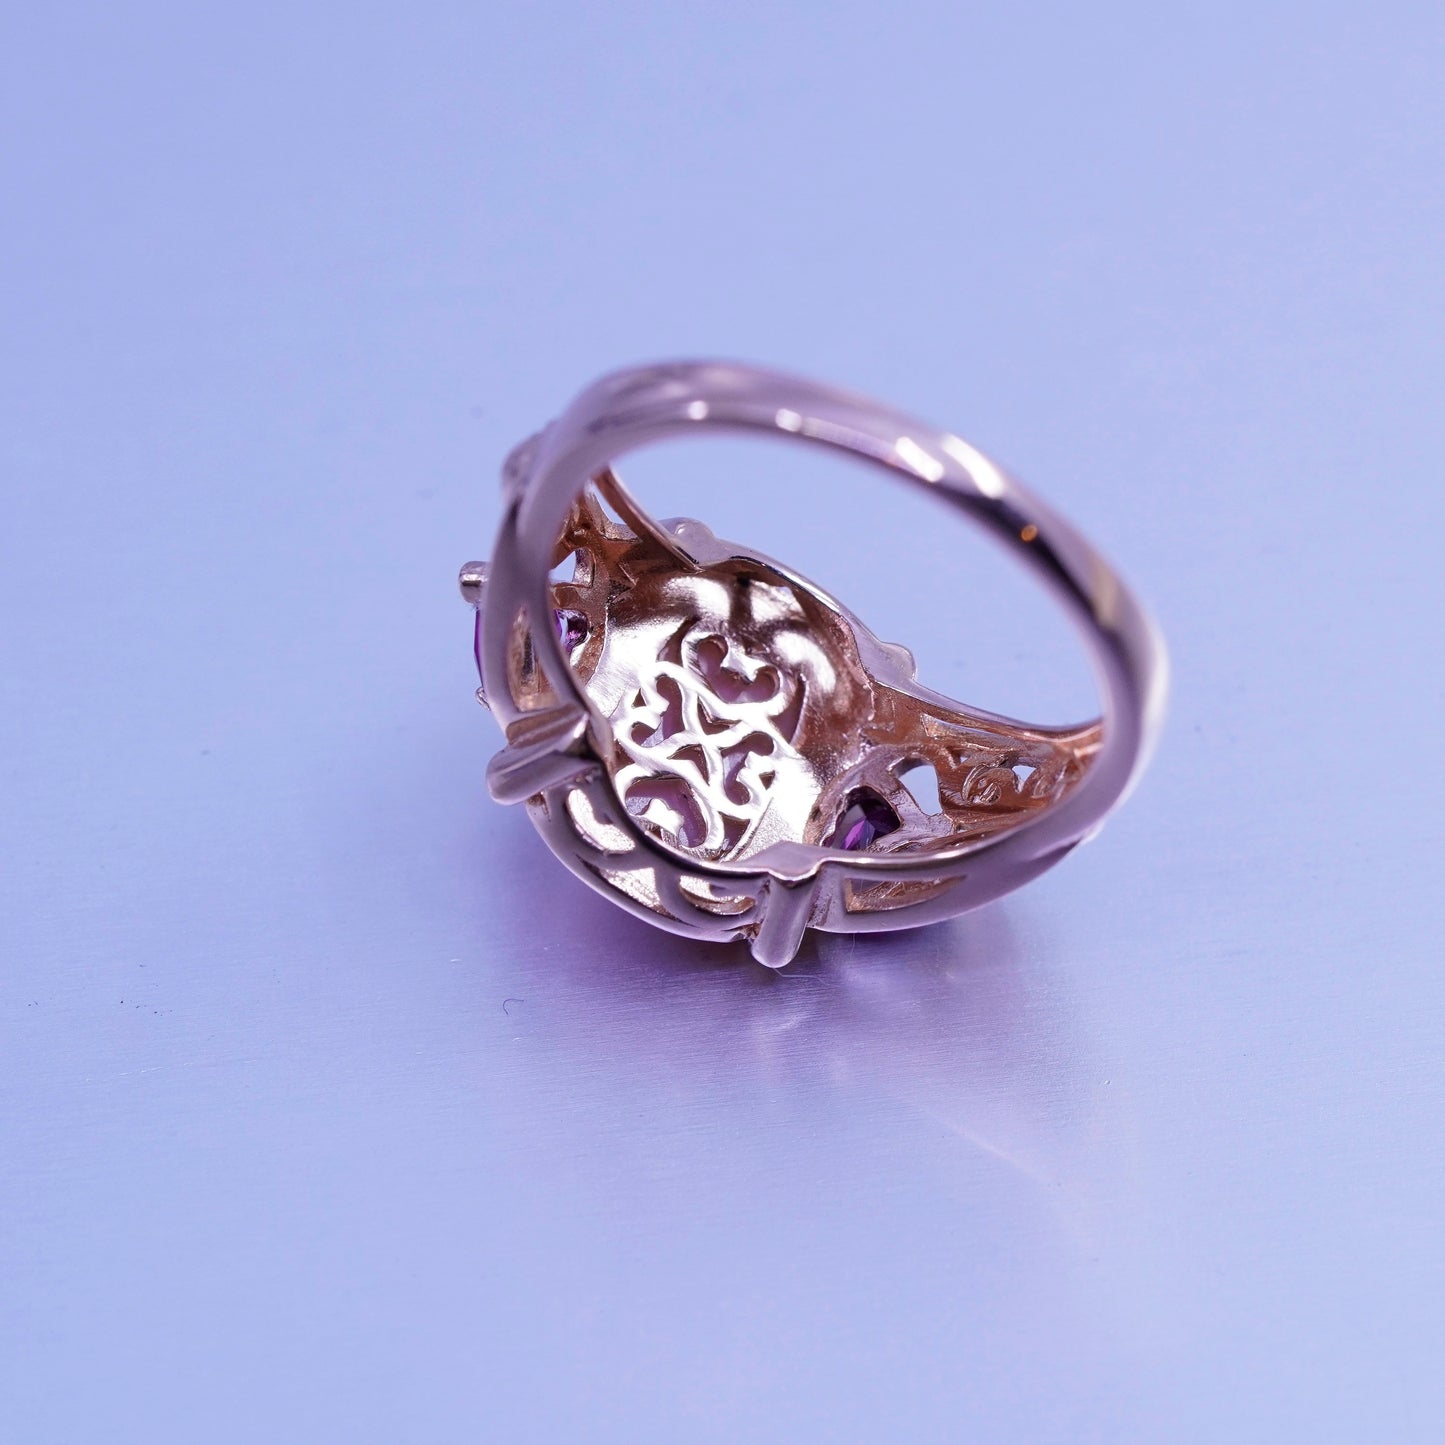 Size 10, DBJ vermeil rose gold over Sterling 925 silver band ring quartz heart